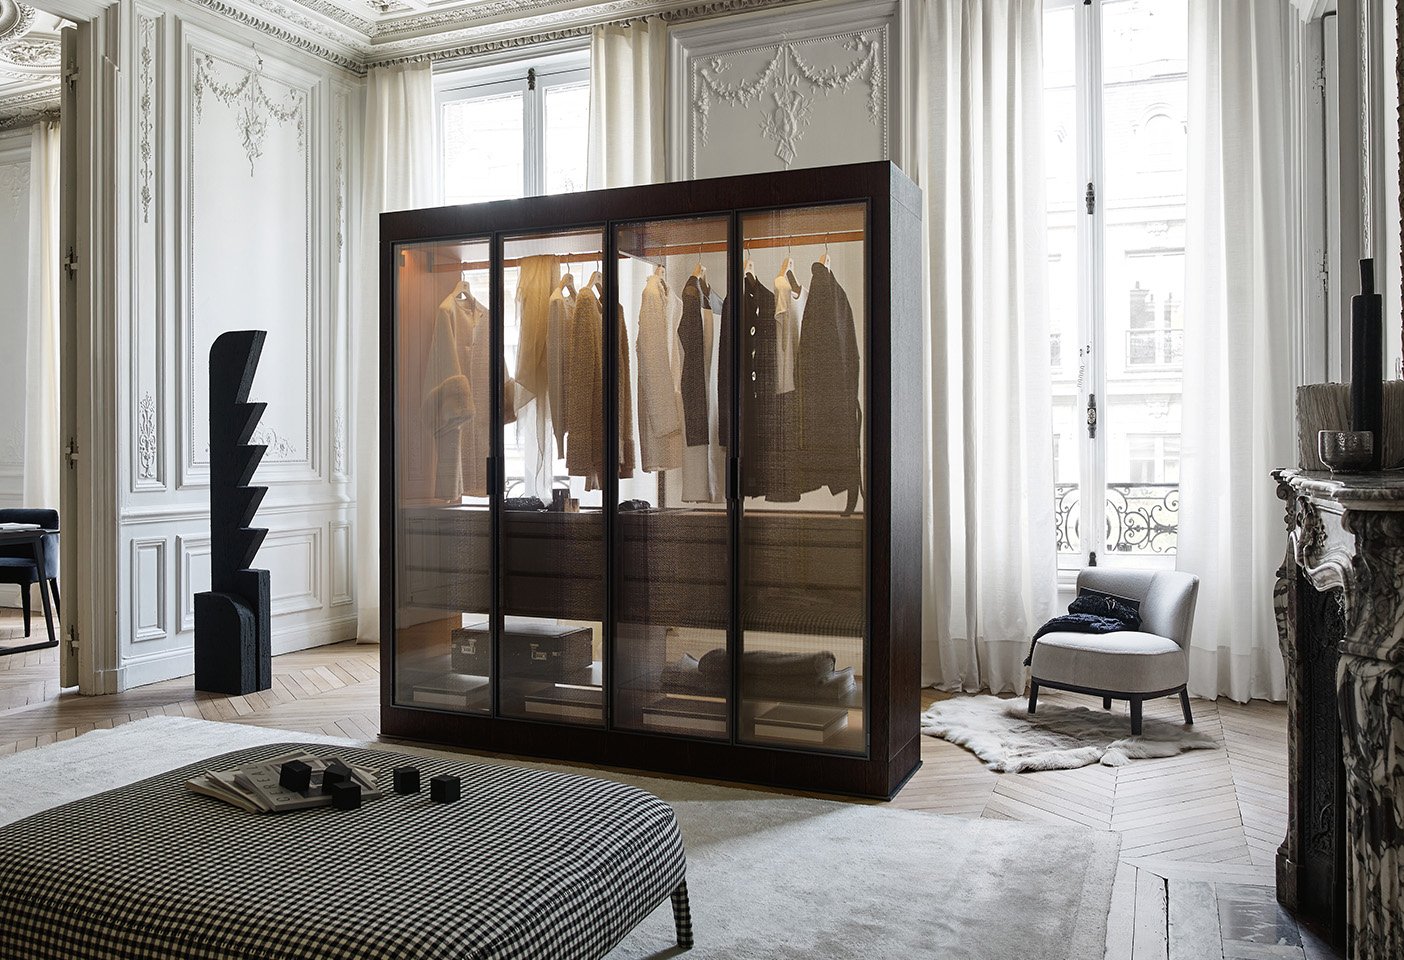 The Eracle wardrobe designed by Antonio Citterio for Maxalto. Photo c/o Maxalto.